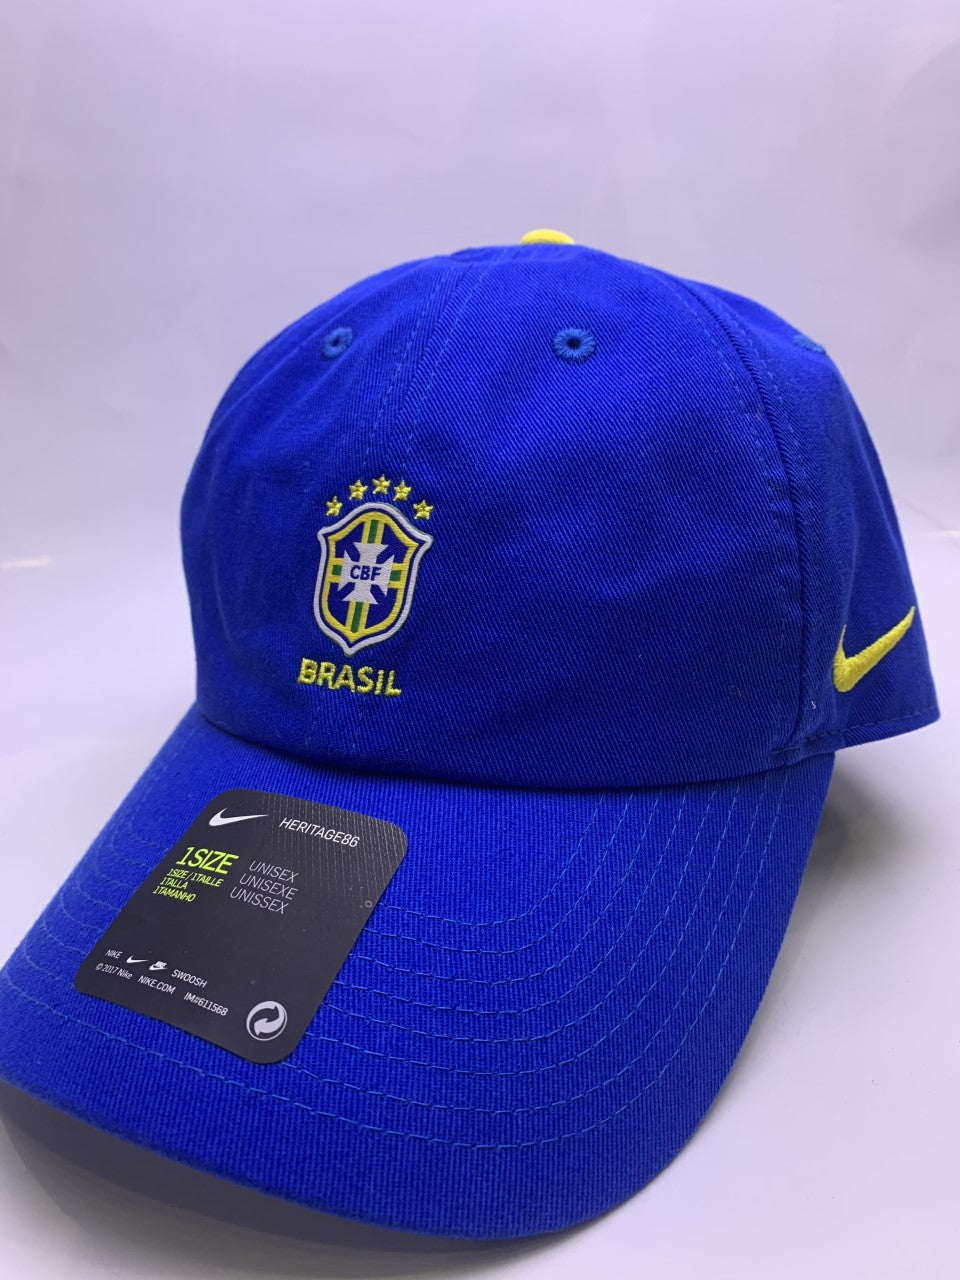 CBF Brasil HERITAGE86 Adjustable Cap